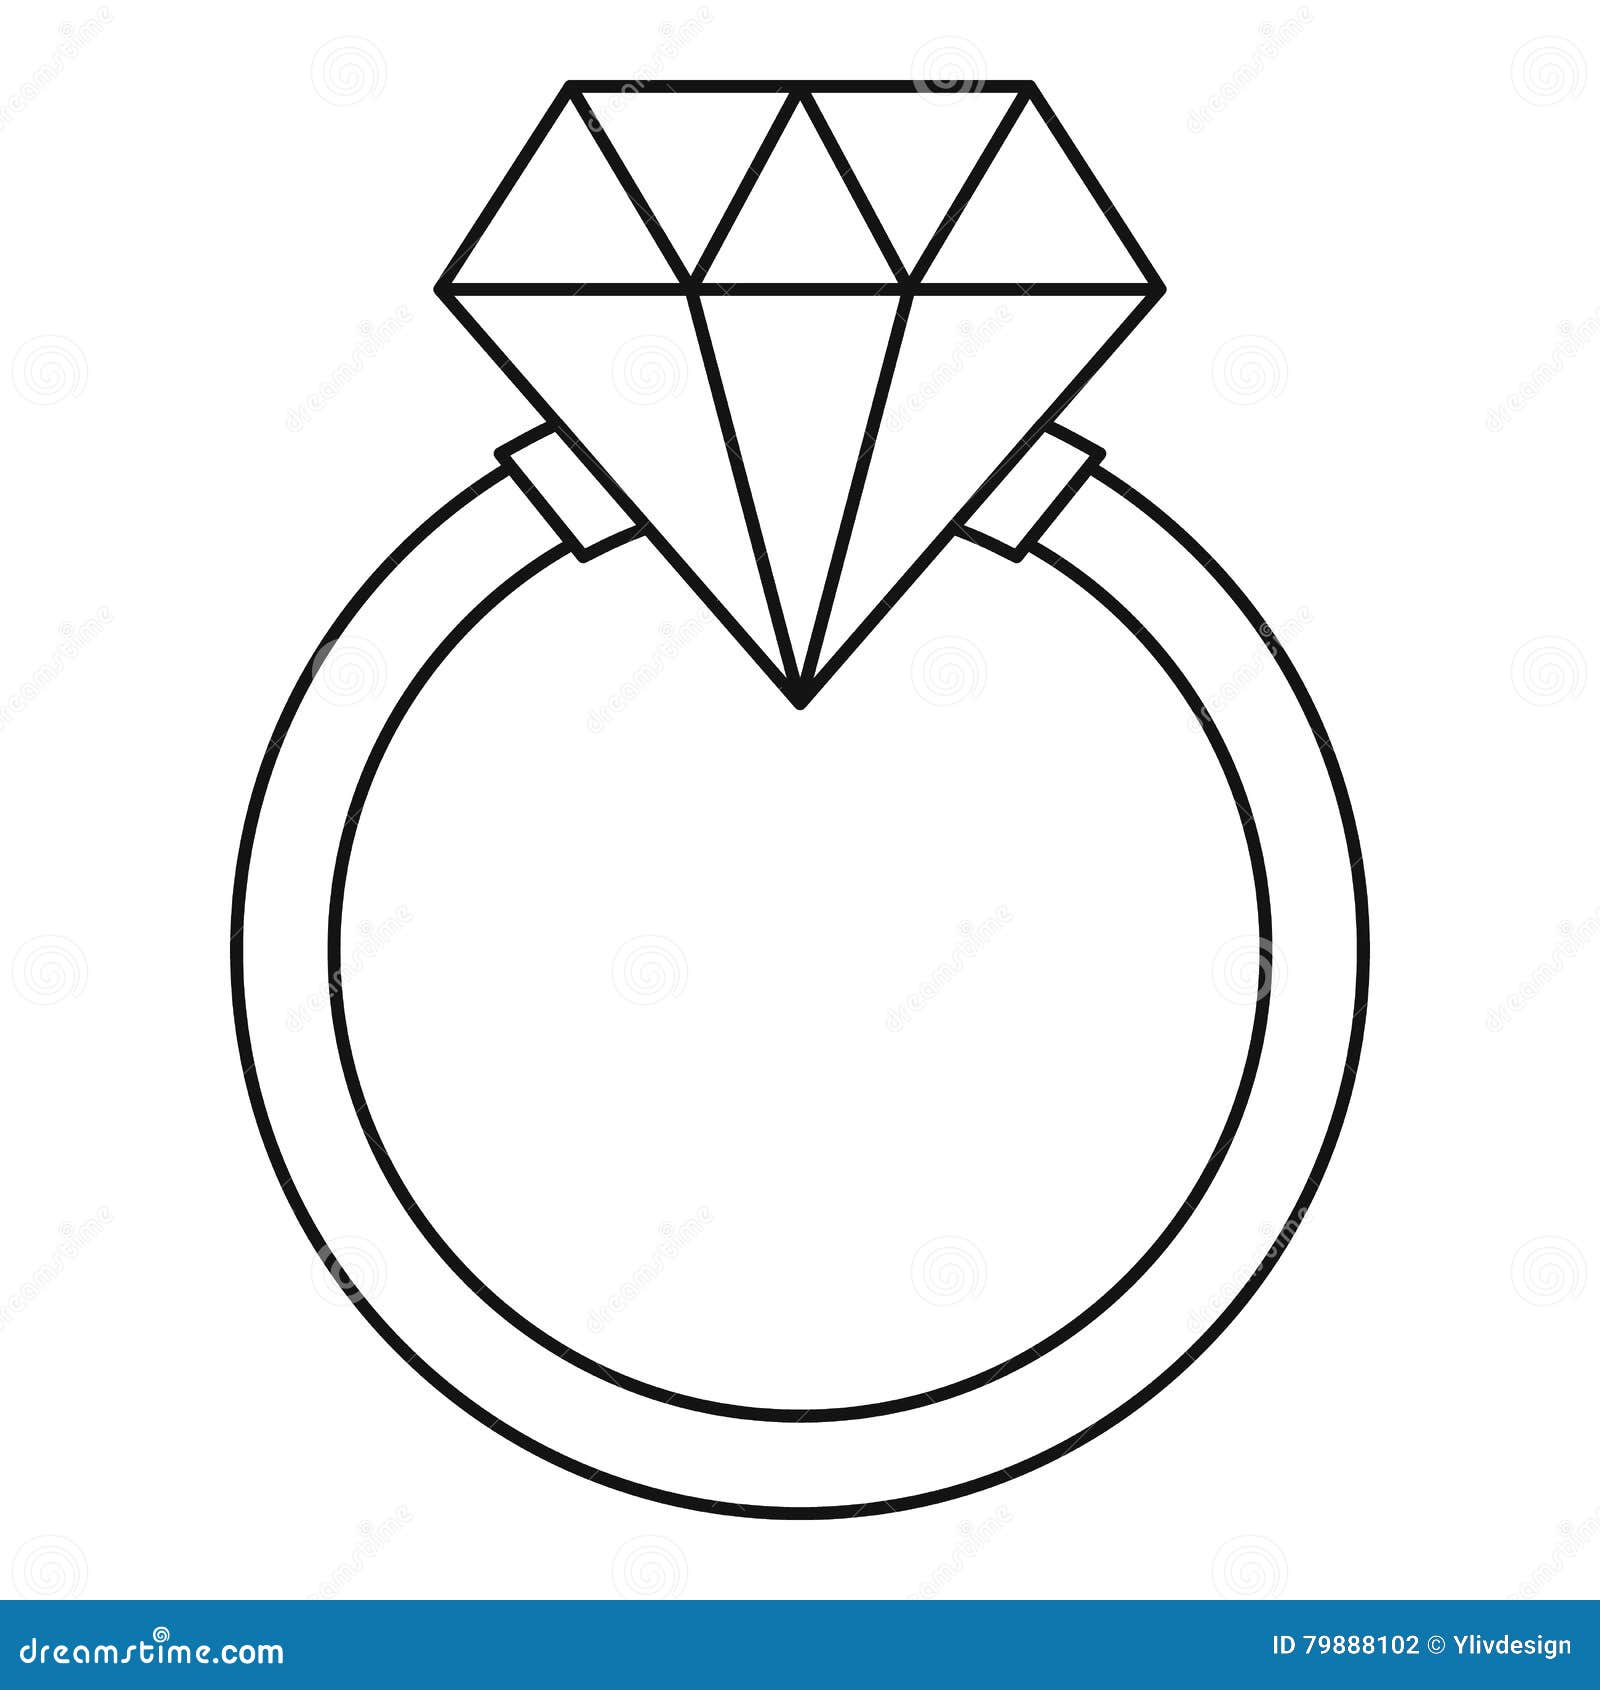 Diamond Ring Outline Clip Art at Clker.com - vector clip art online,  royalty free & public domain